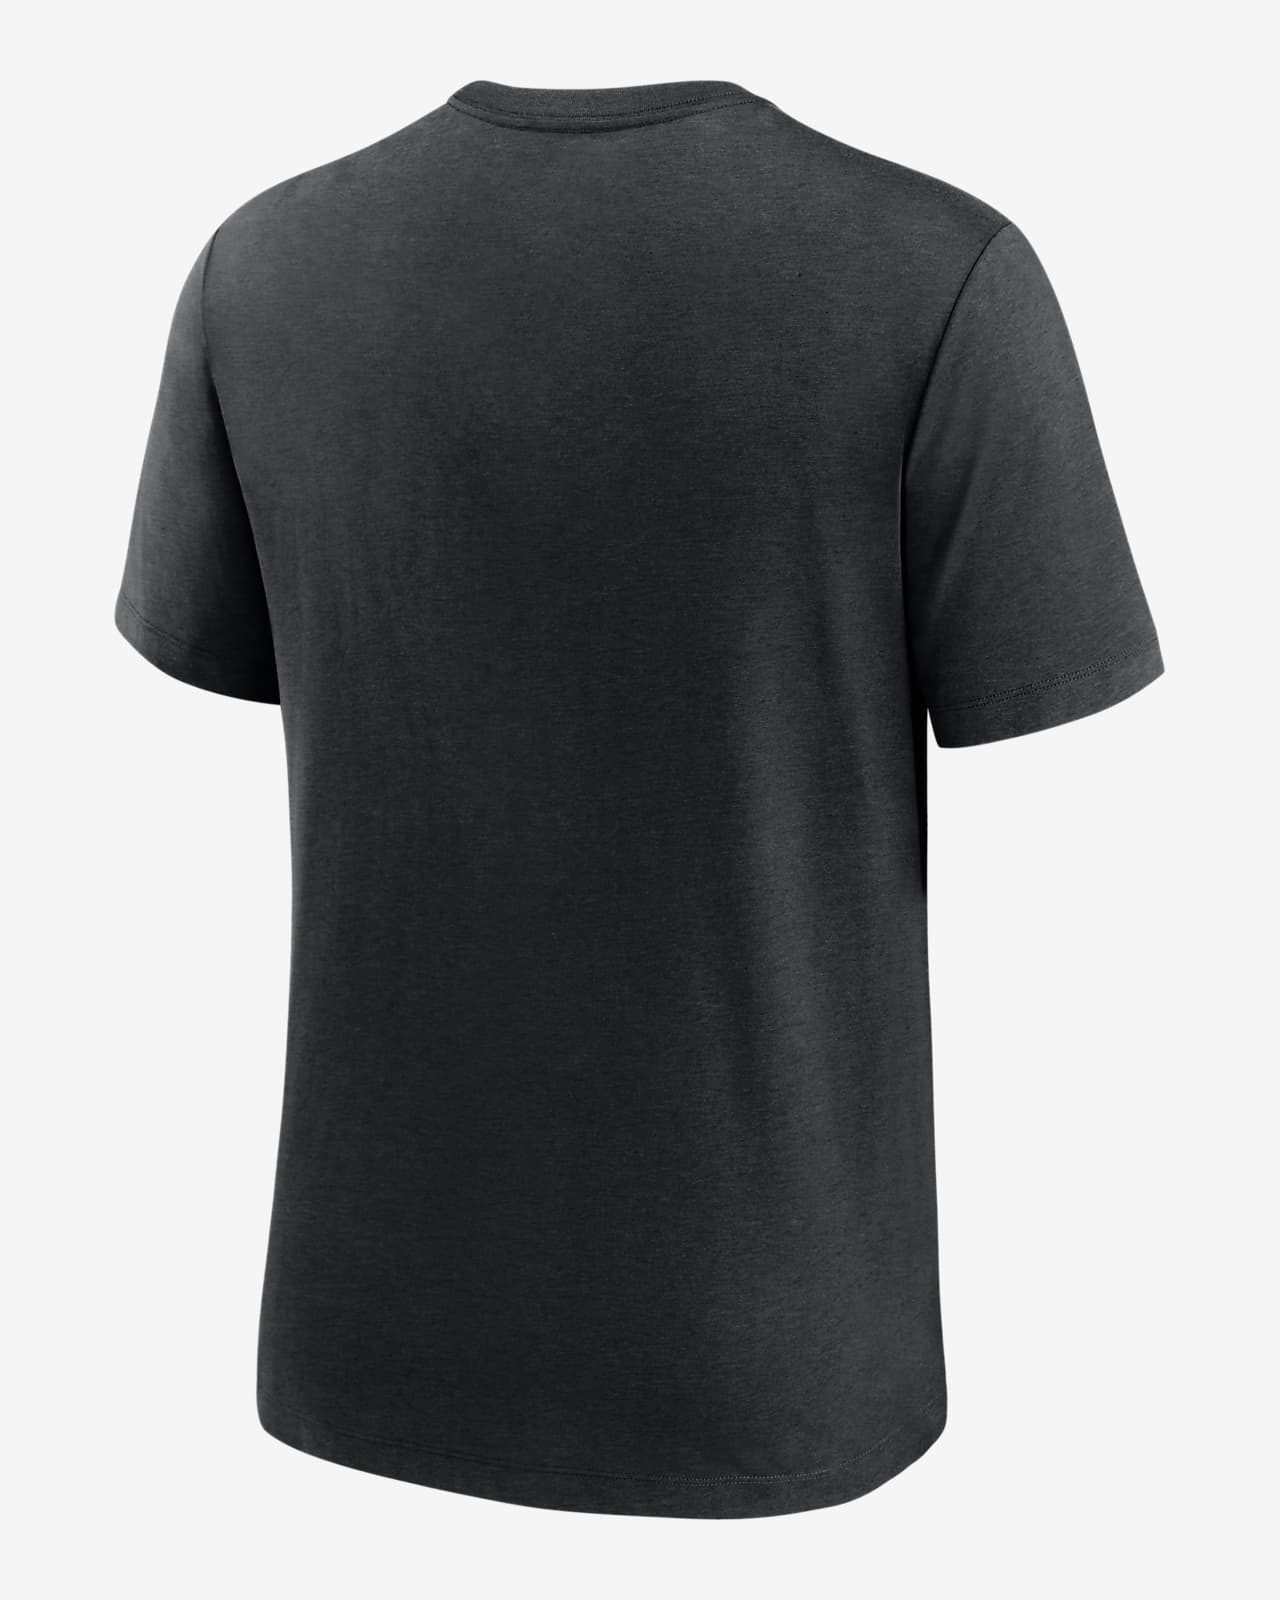 Nike Home Spin (MLB St. Louis Cardinals) Men's T-Shirt.